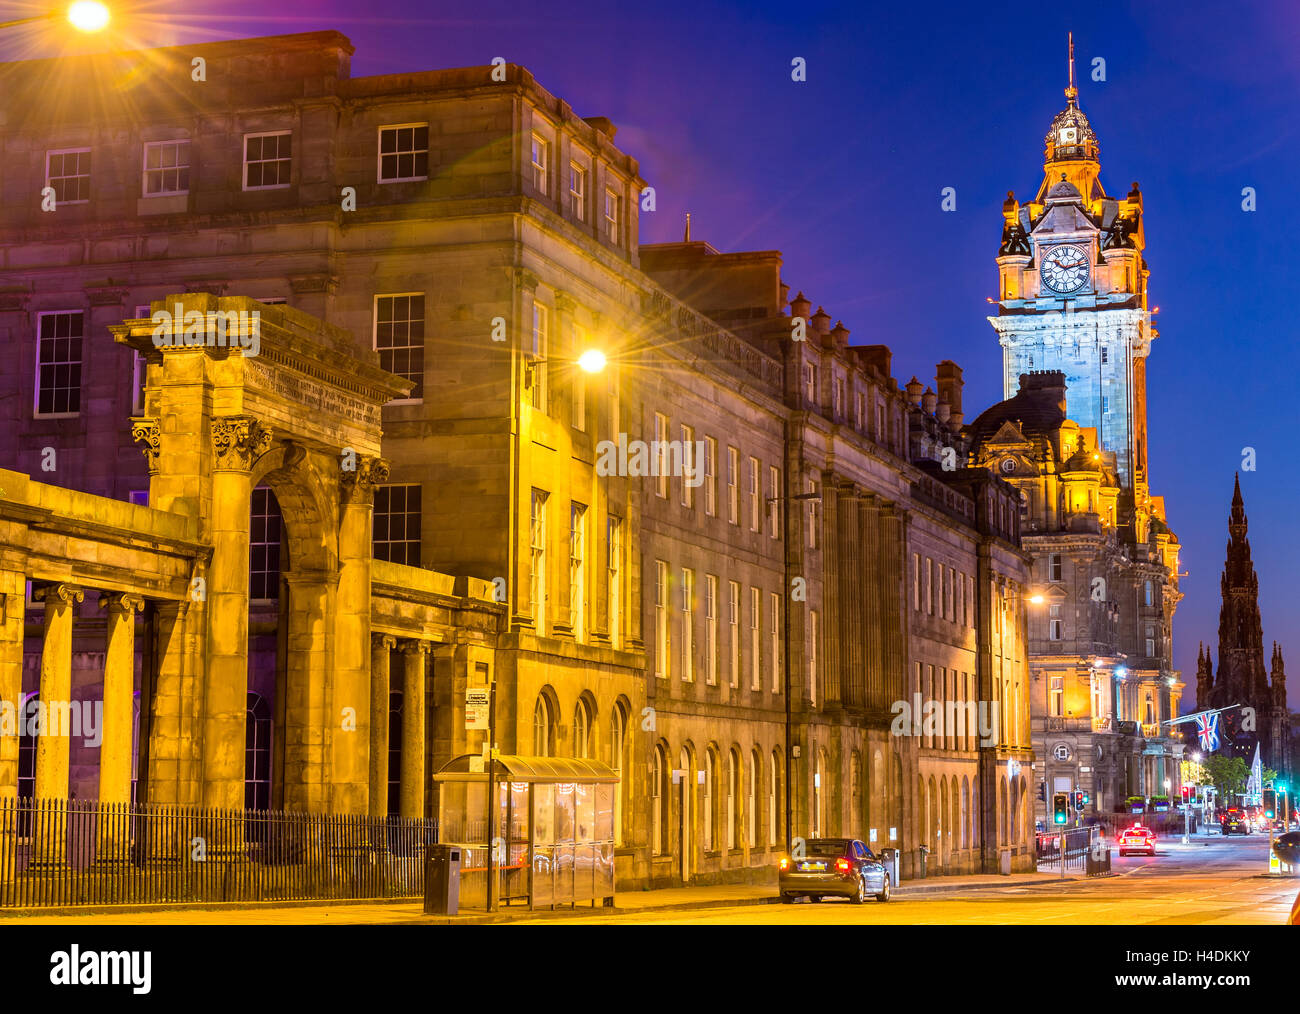 A street in the city centre of Edinburgh - Scotland Stock Photo